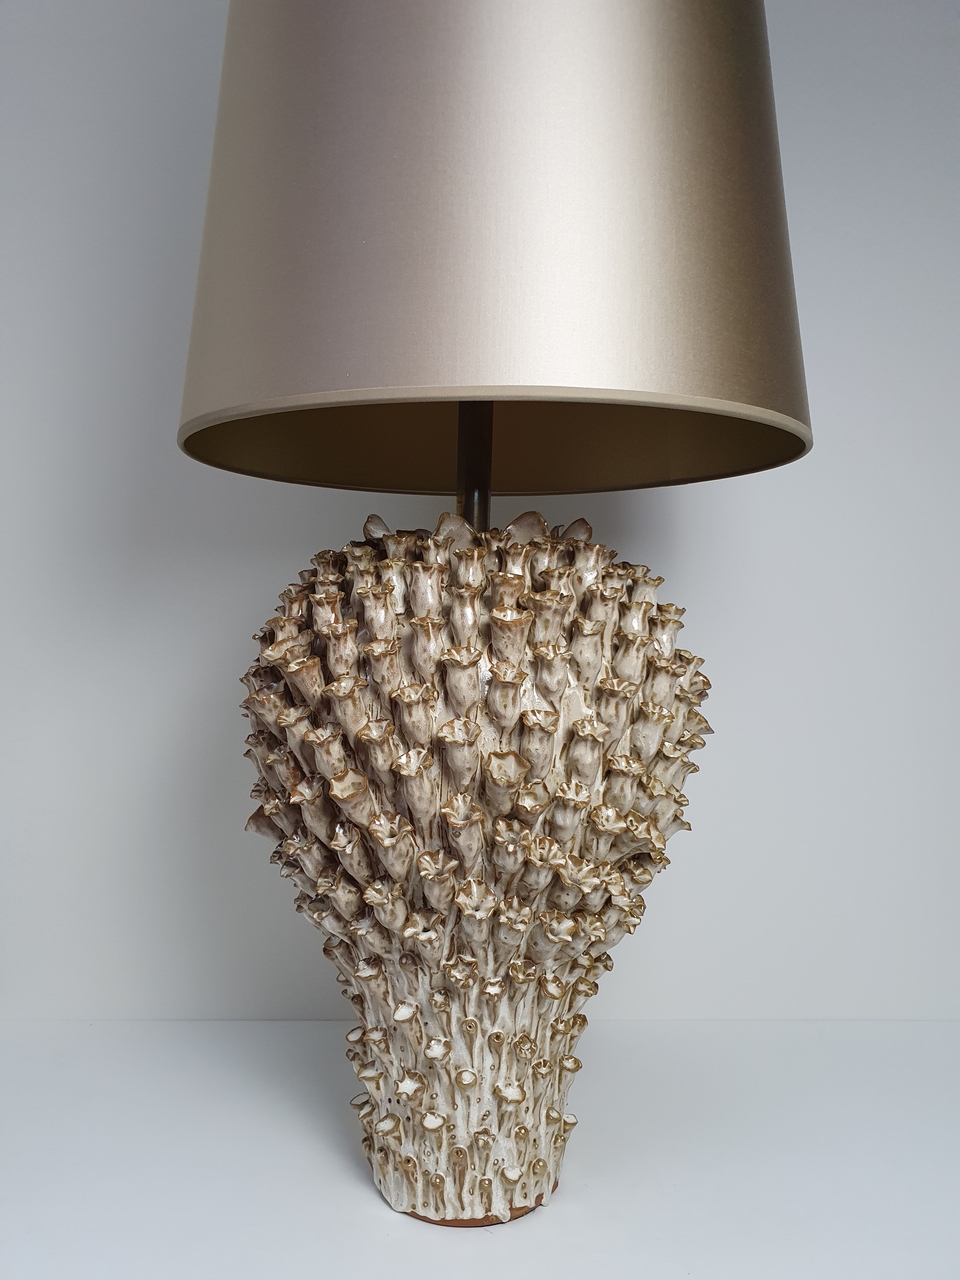 Korting Schrikken telex keramiek koraal grote tafellamp met hoge lampenkap in champagne kleur -  Toro Interior Design - Exclusief interieur in Maastricht